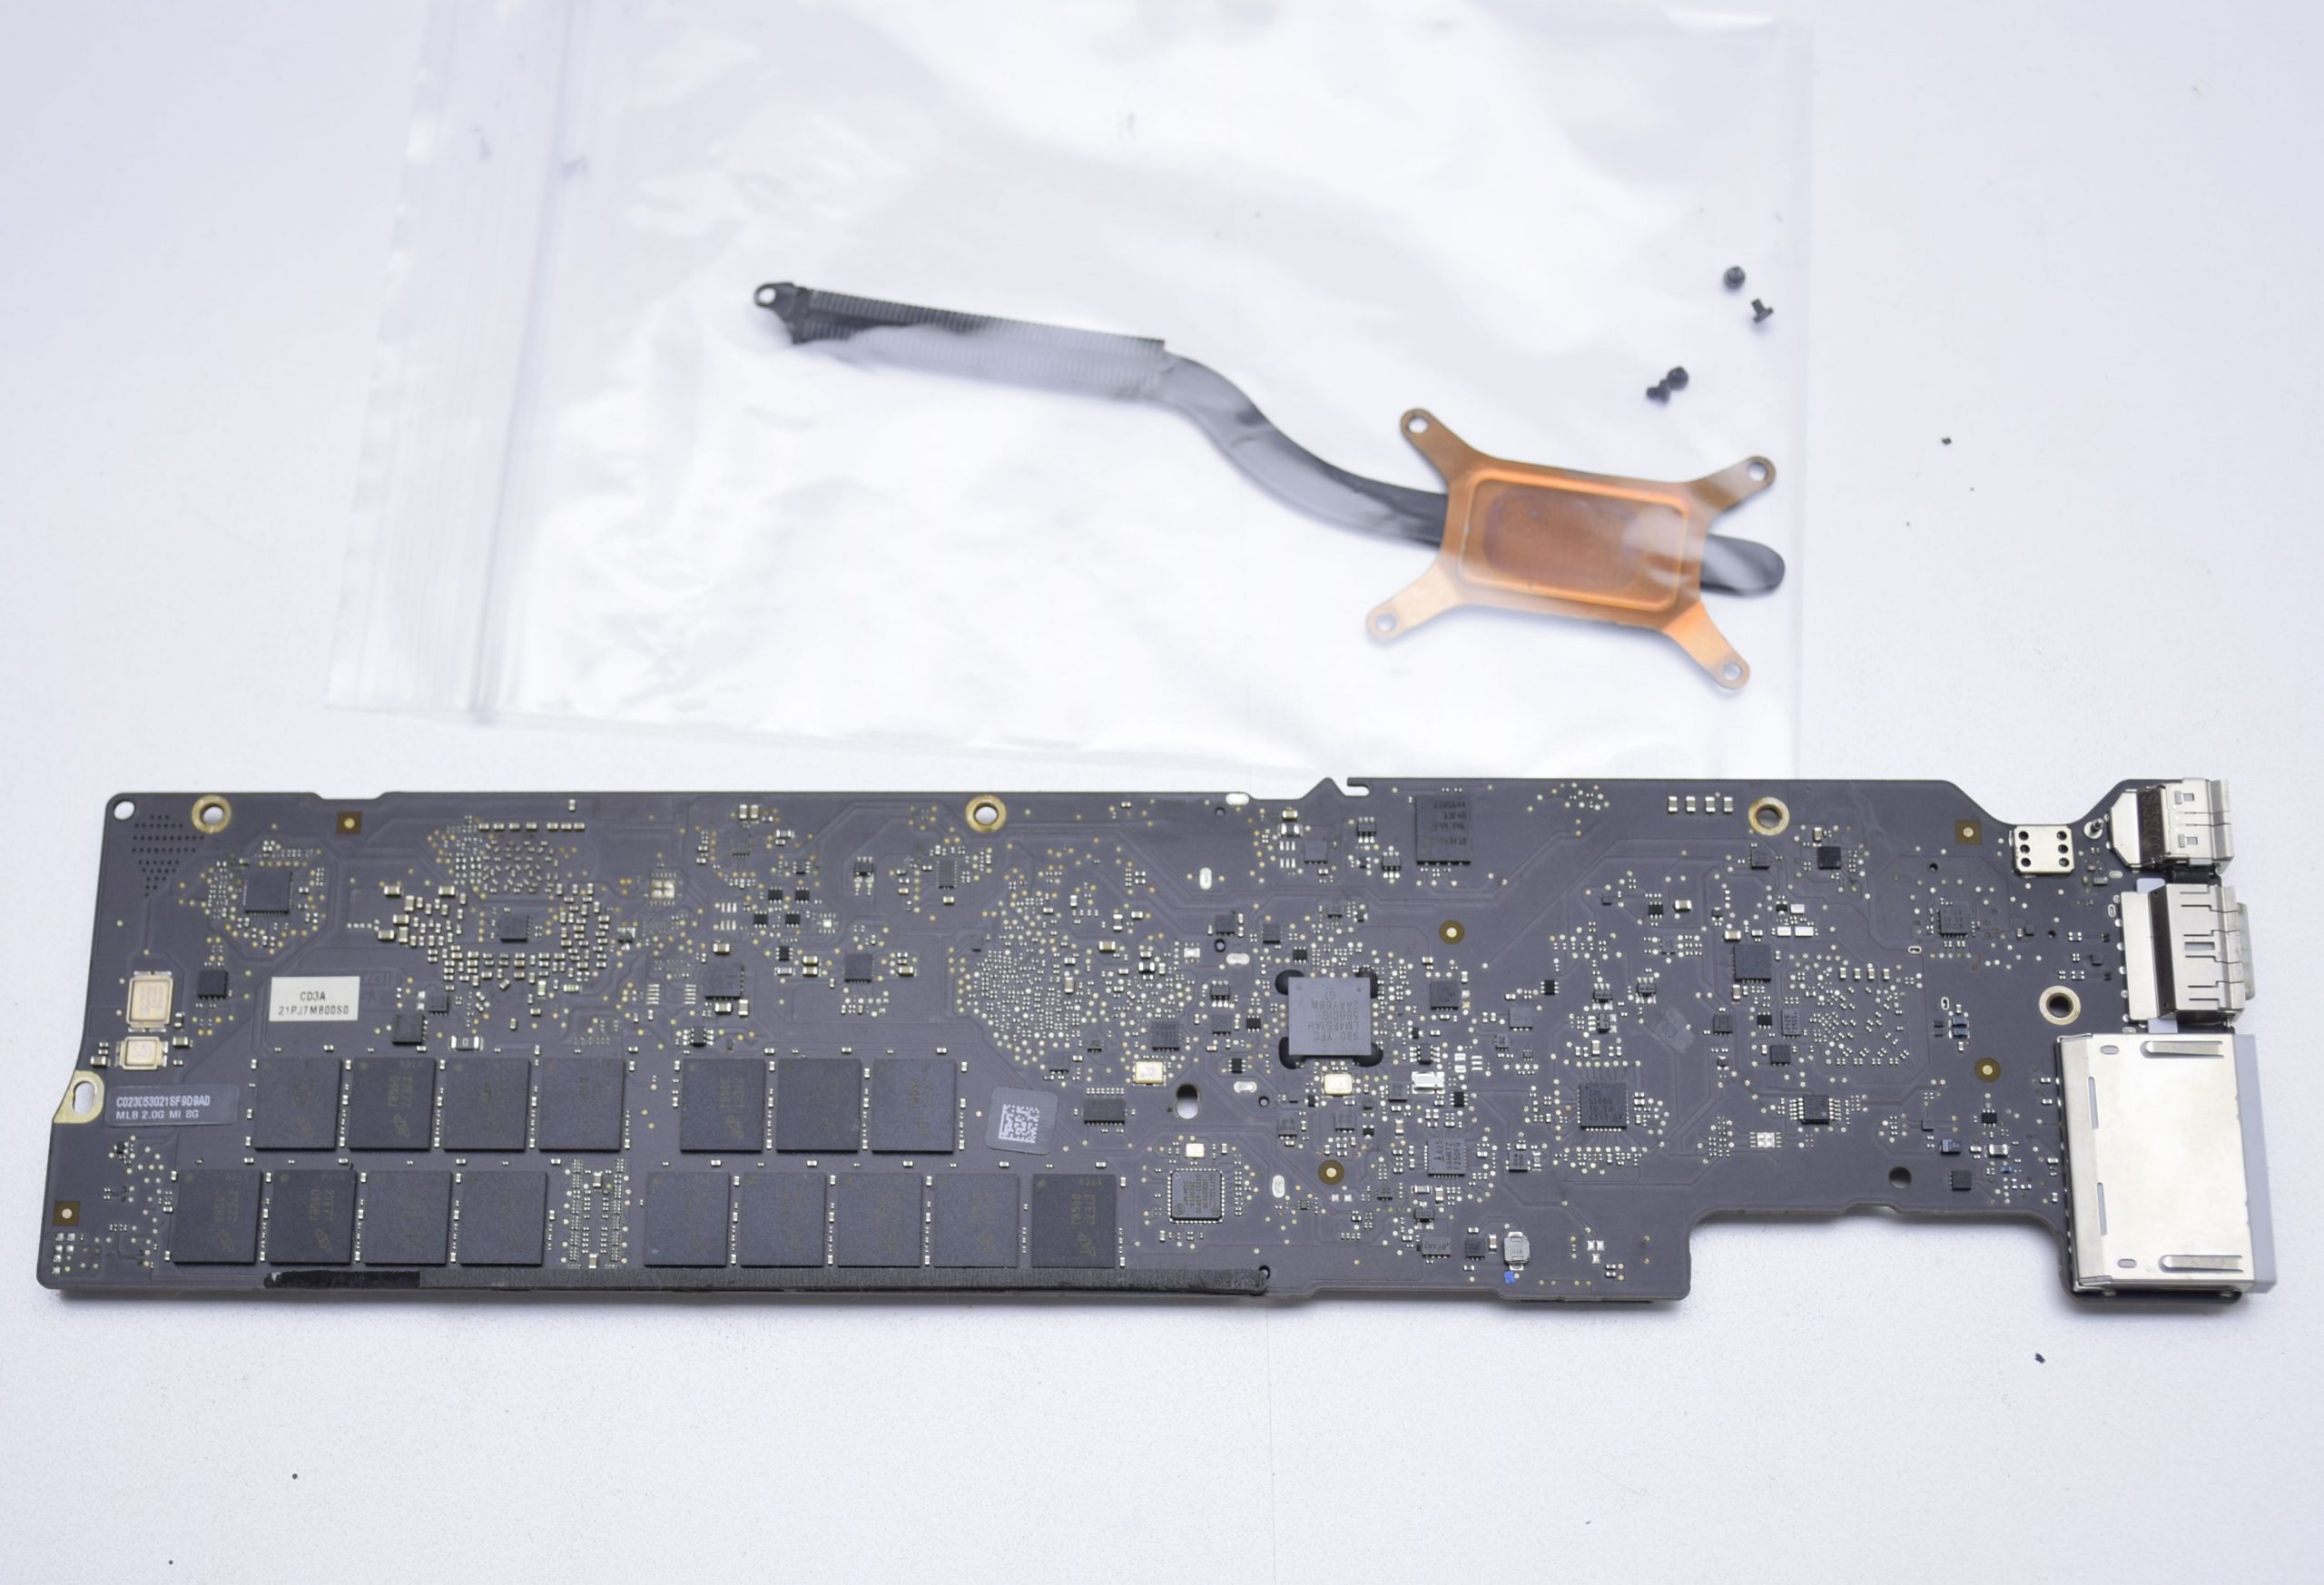 taking apart apple macbook pro a1286 mid 2012